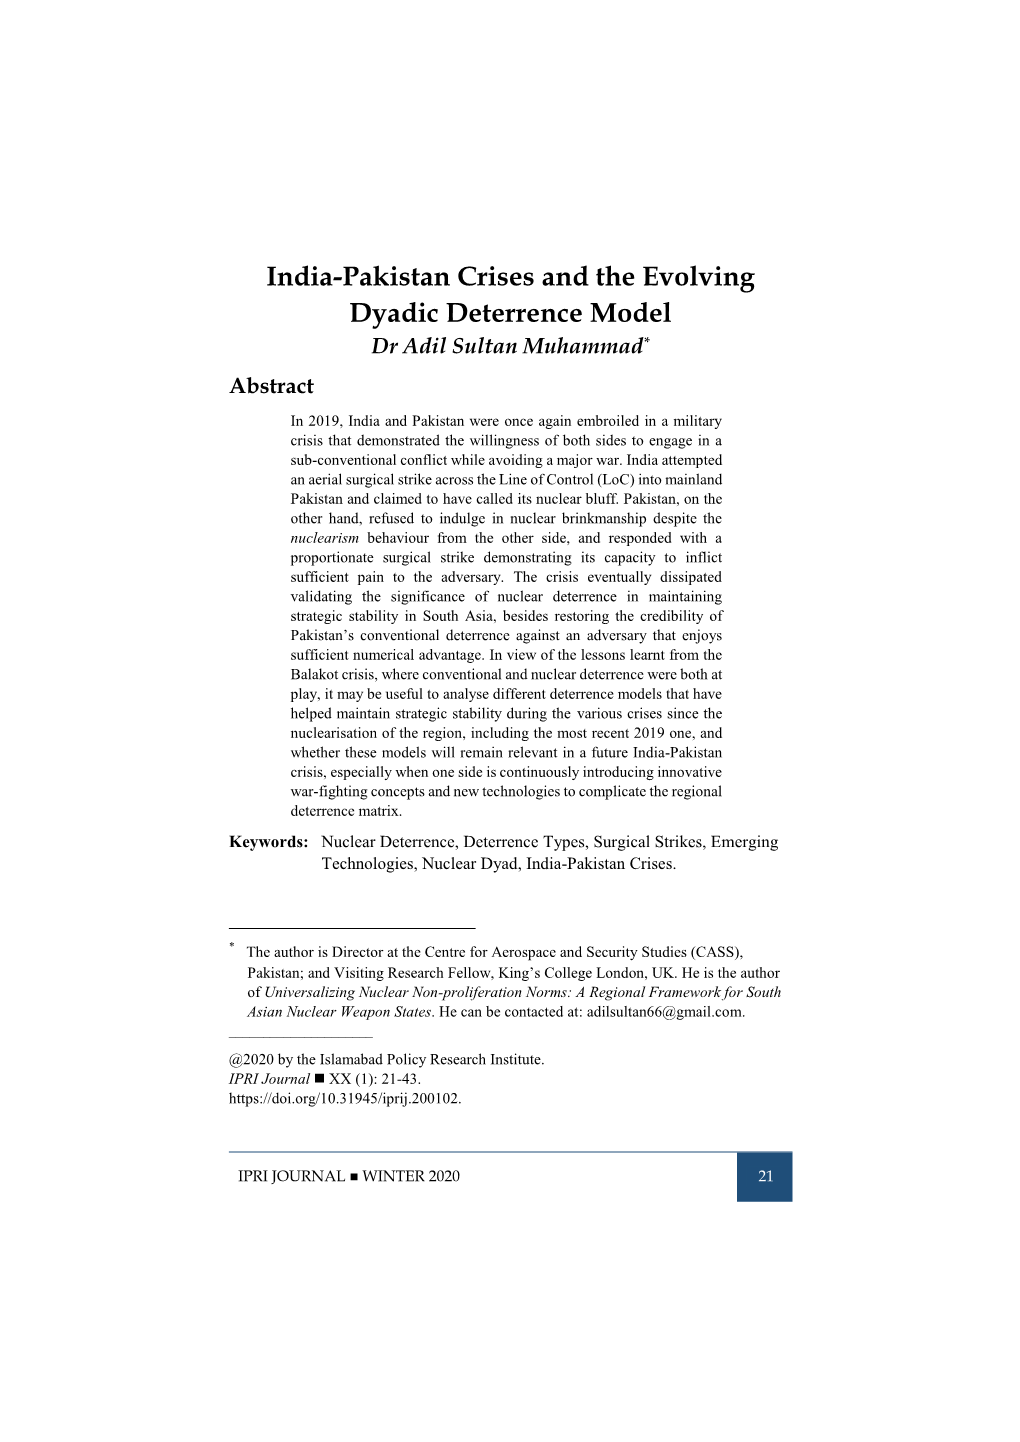 India-Pakistan Crises and the Evolving Dyadic Deterrence Model